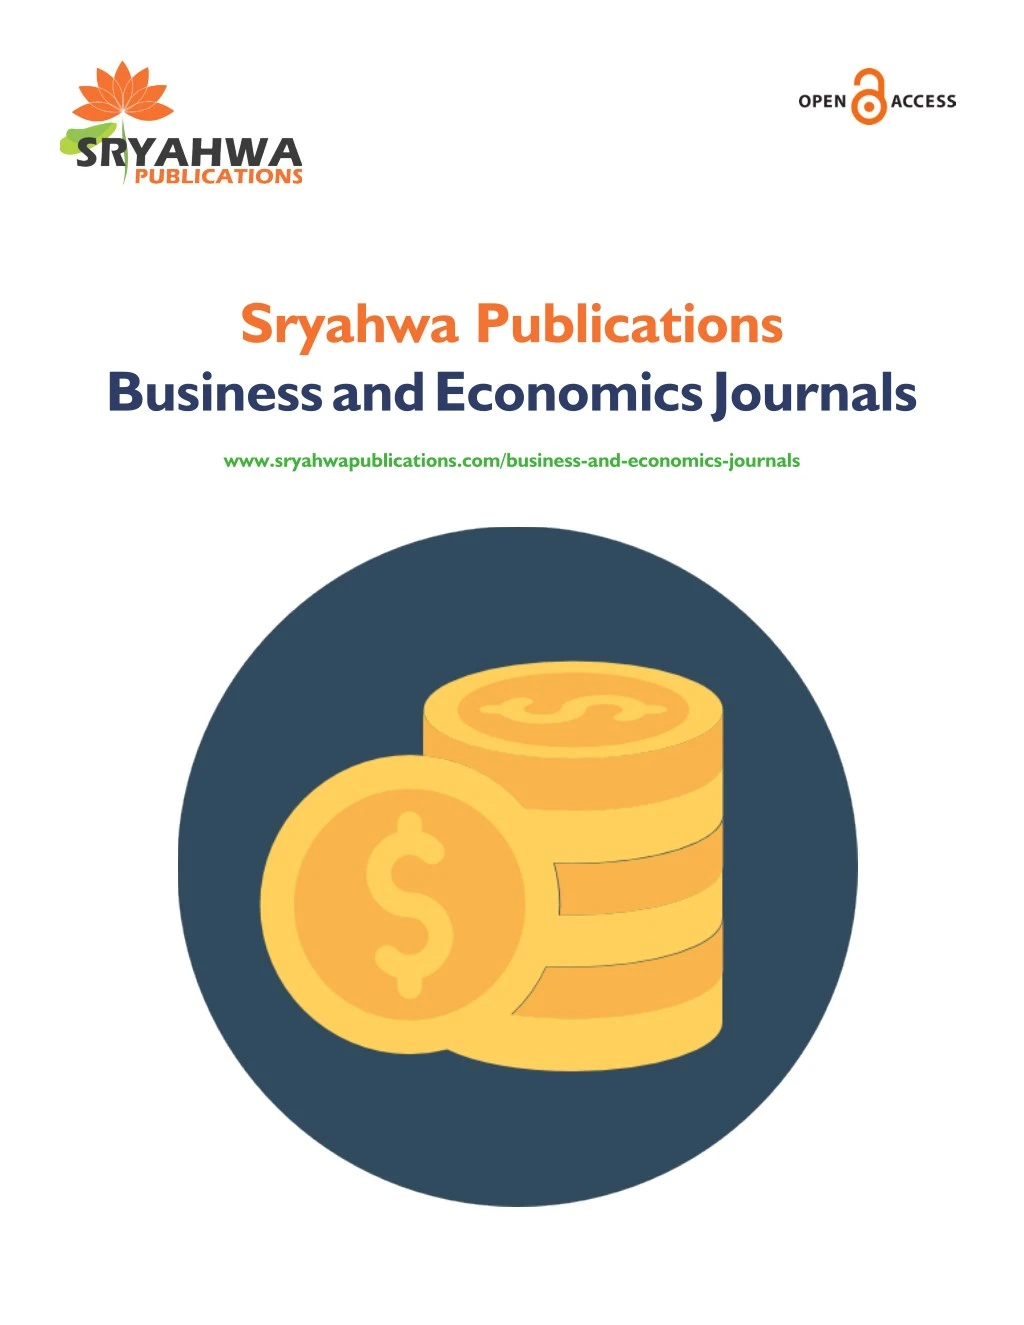 sryahwa publications business and economics